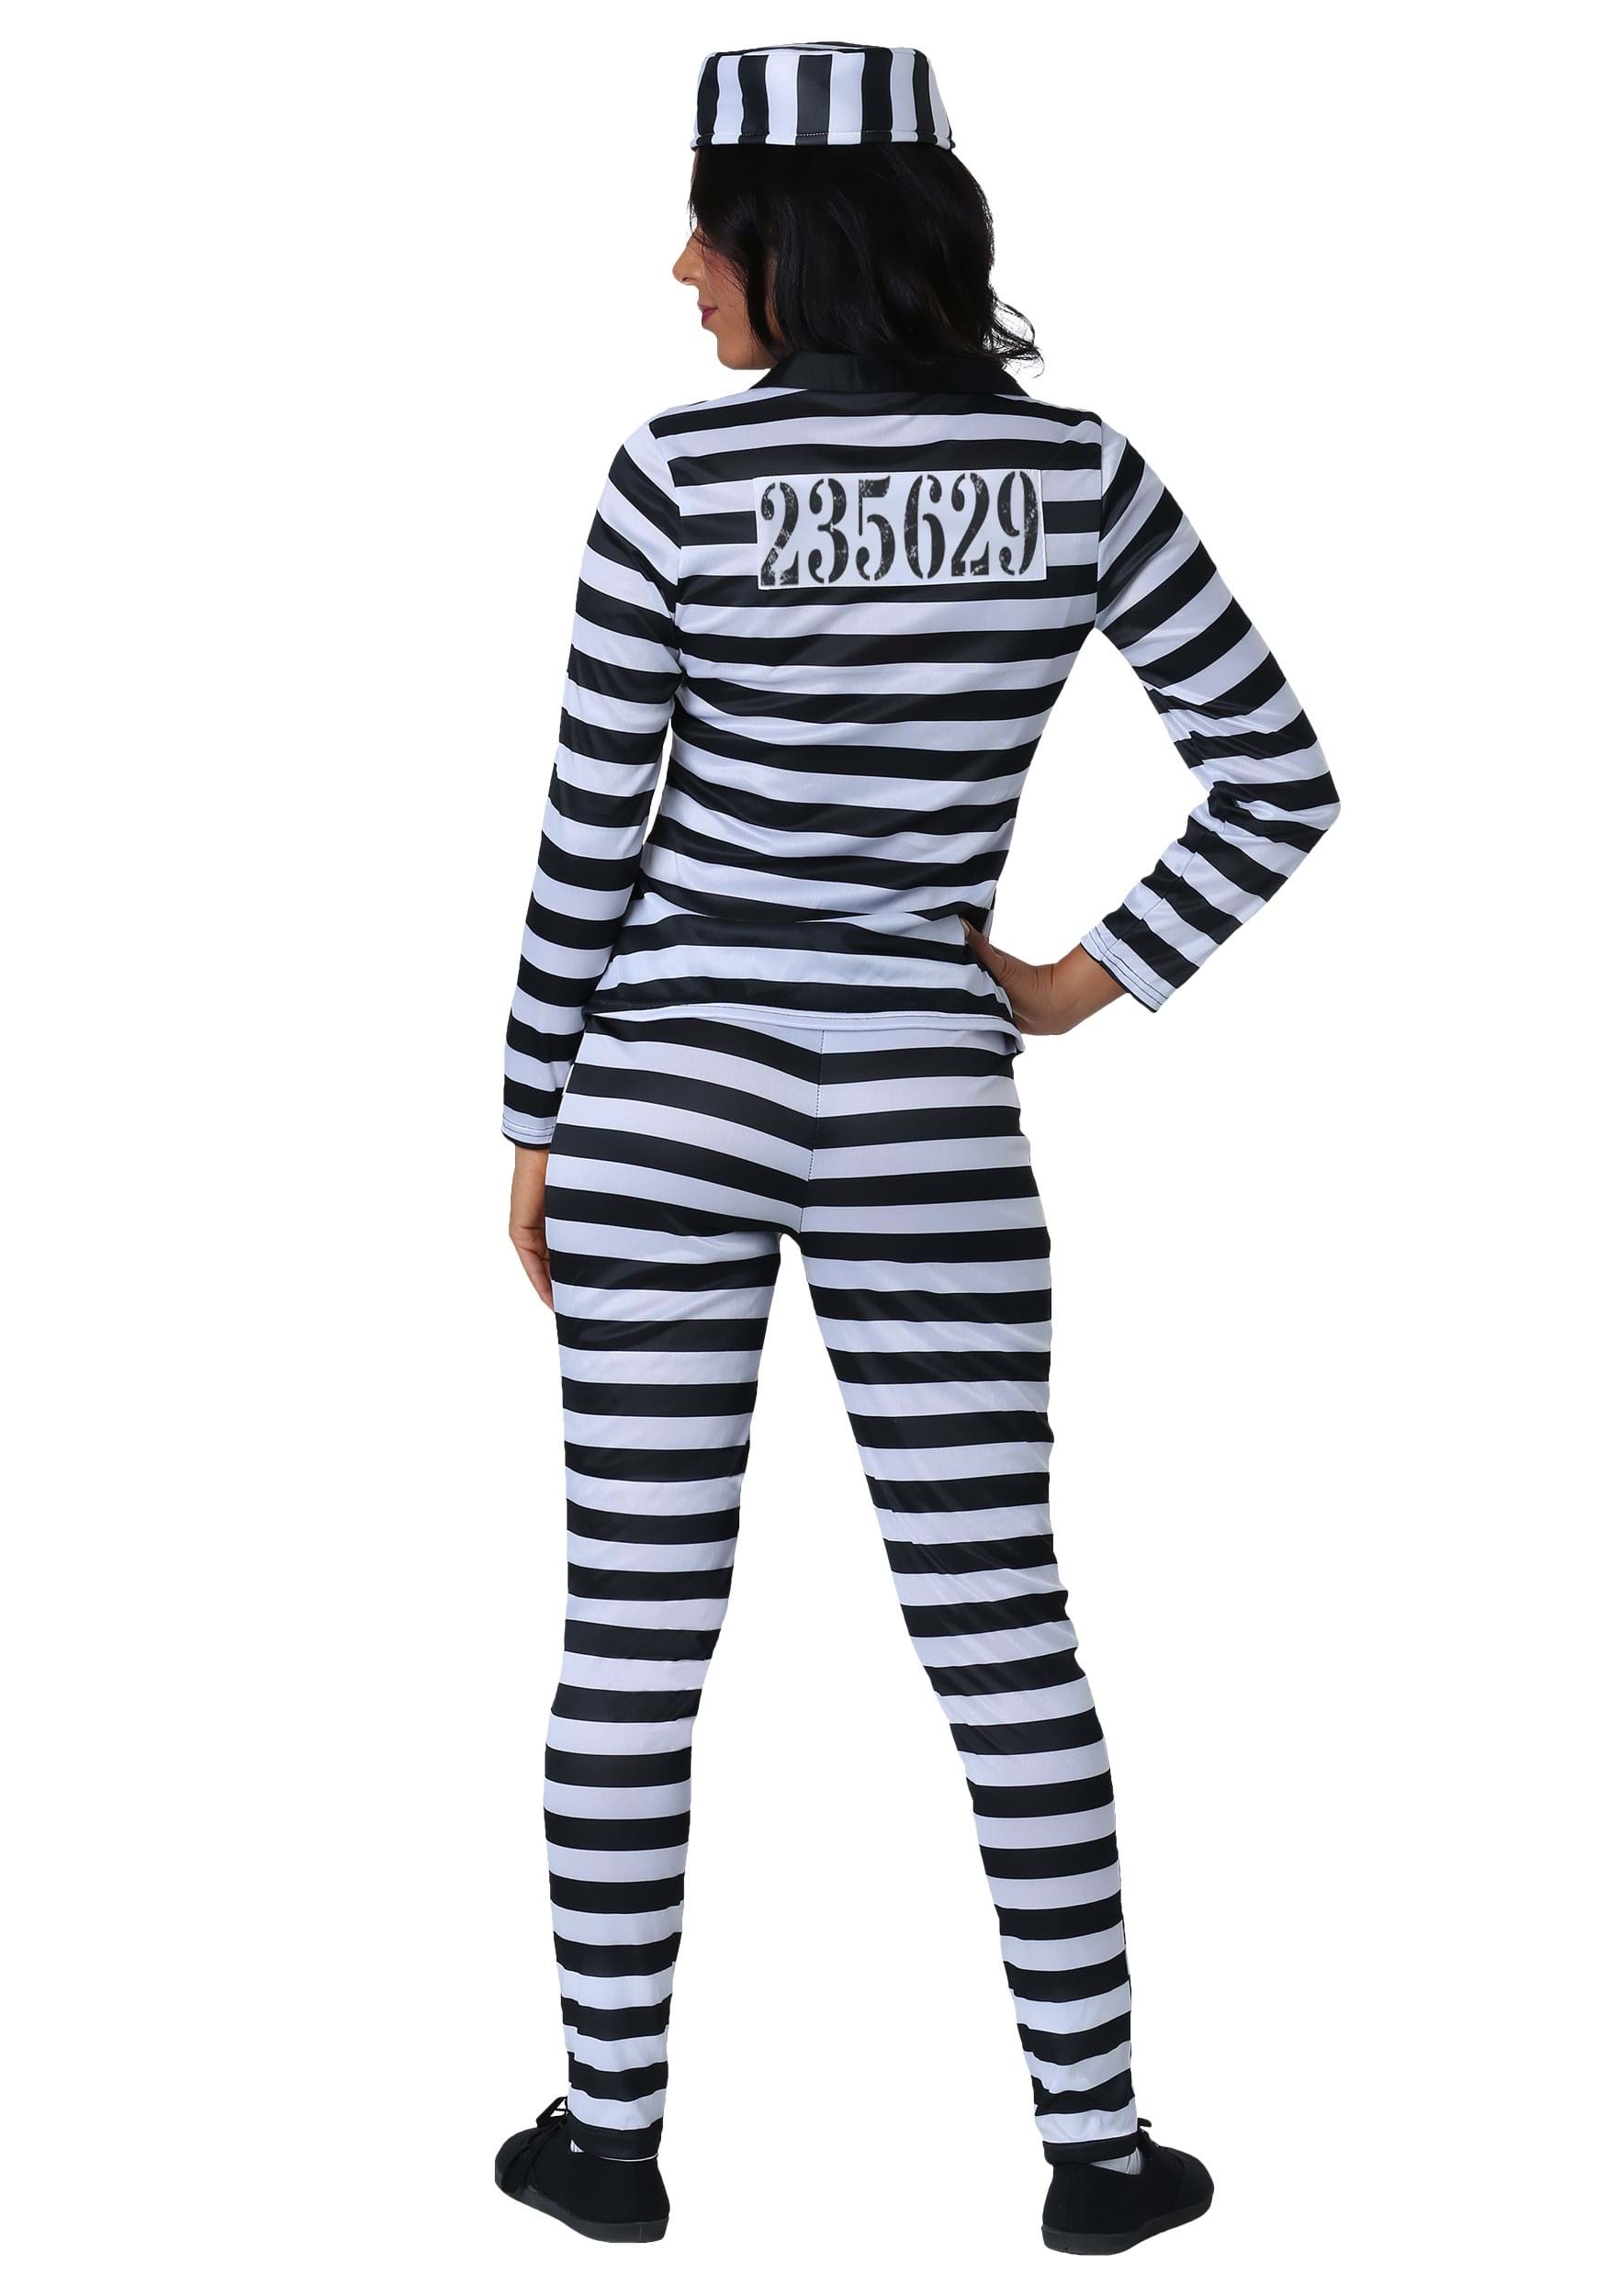 Incarcerated Cutie Fancy Dress Costume For Women